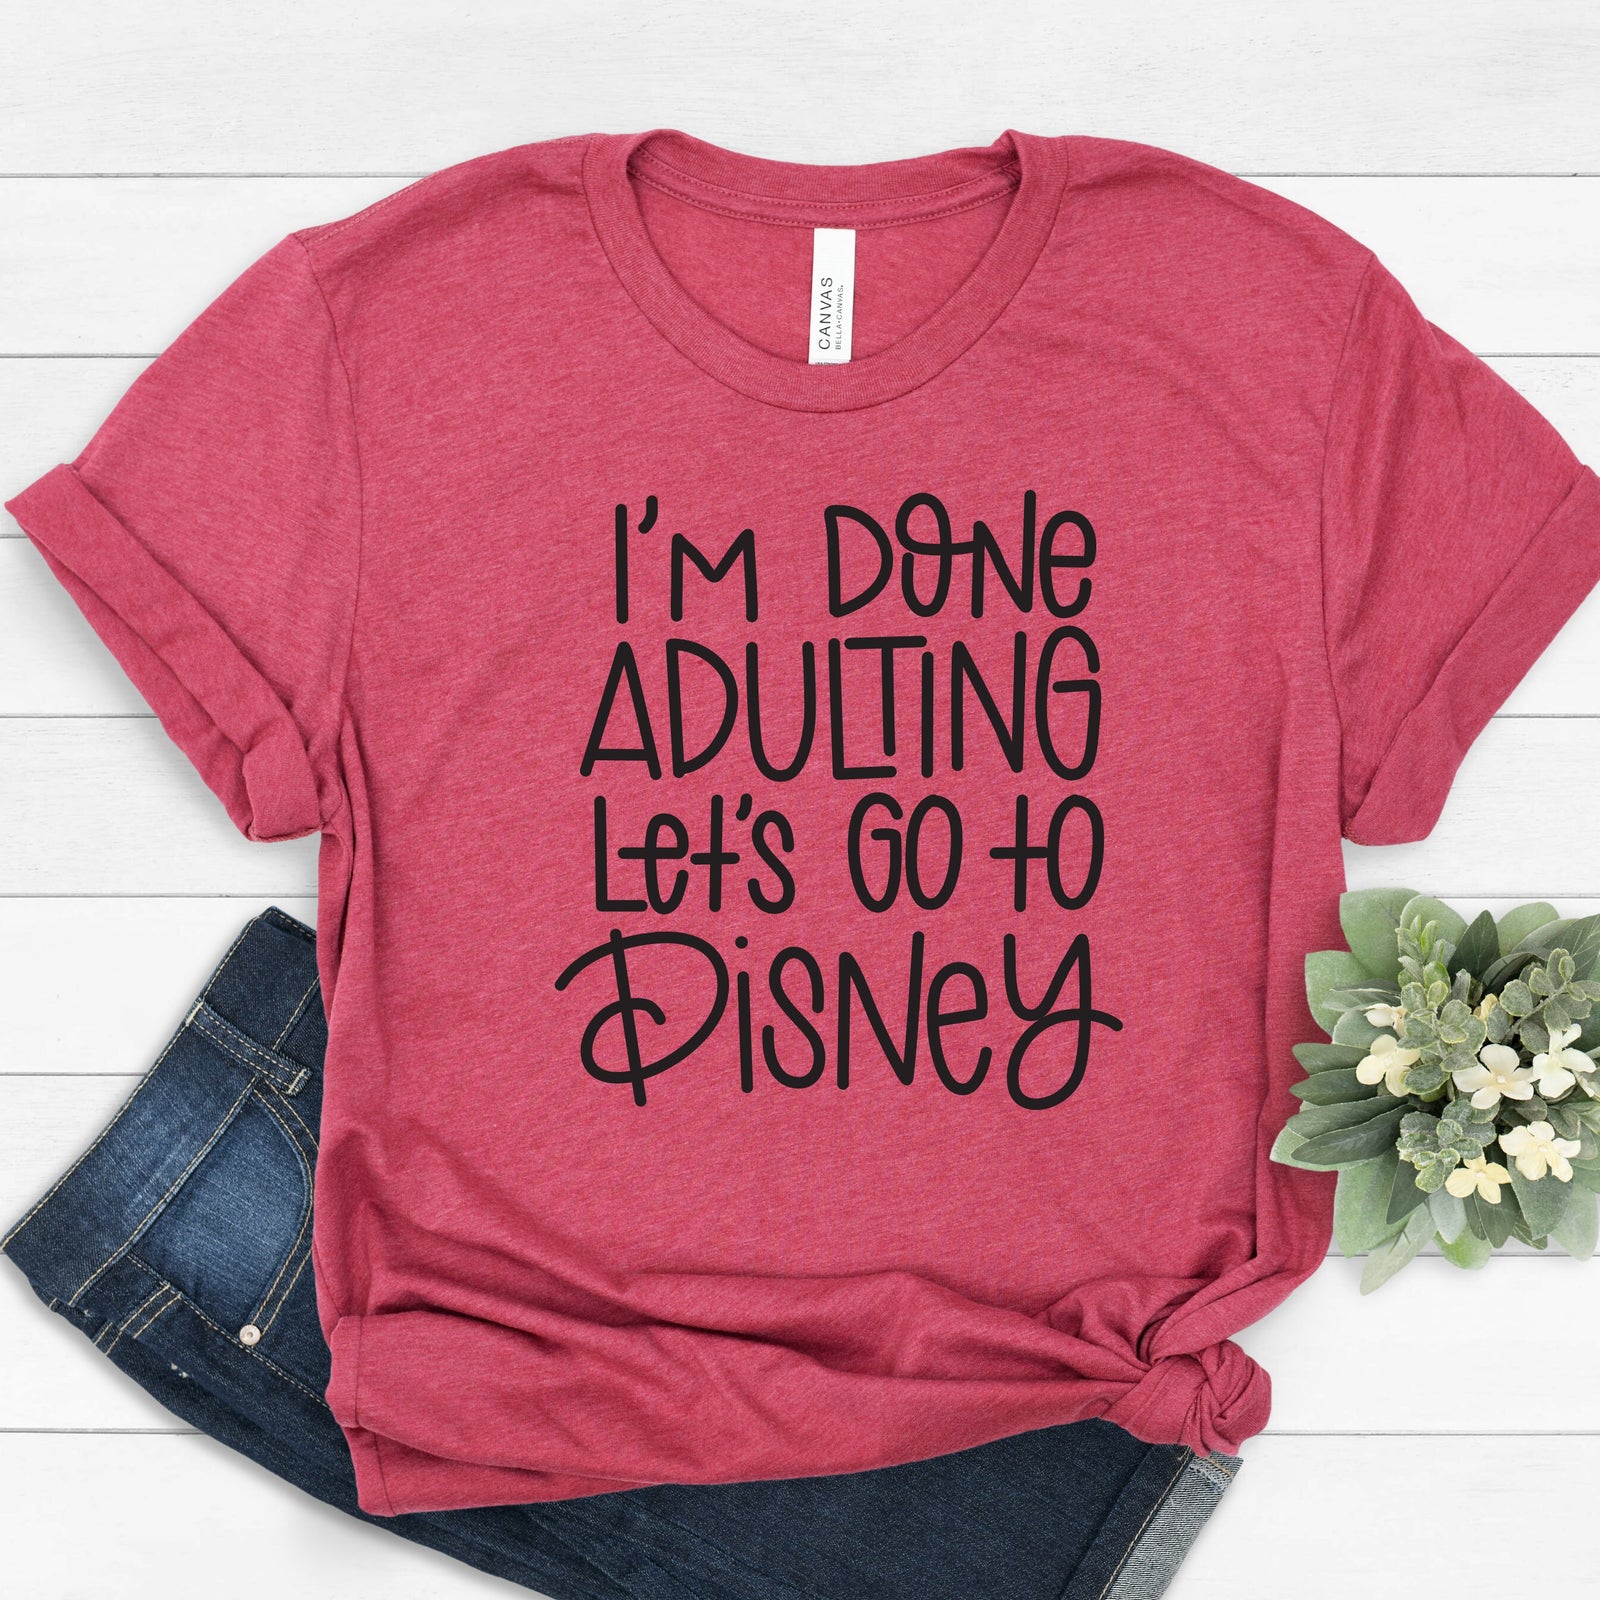 I'm Done Adulting Let's Go to Disney T Shirt - Disney Trip Matching Shirts - Disney Family